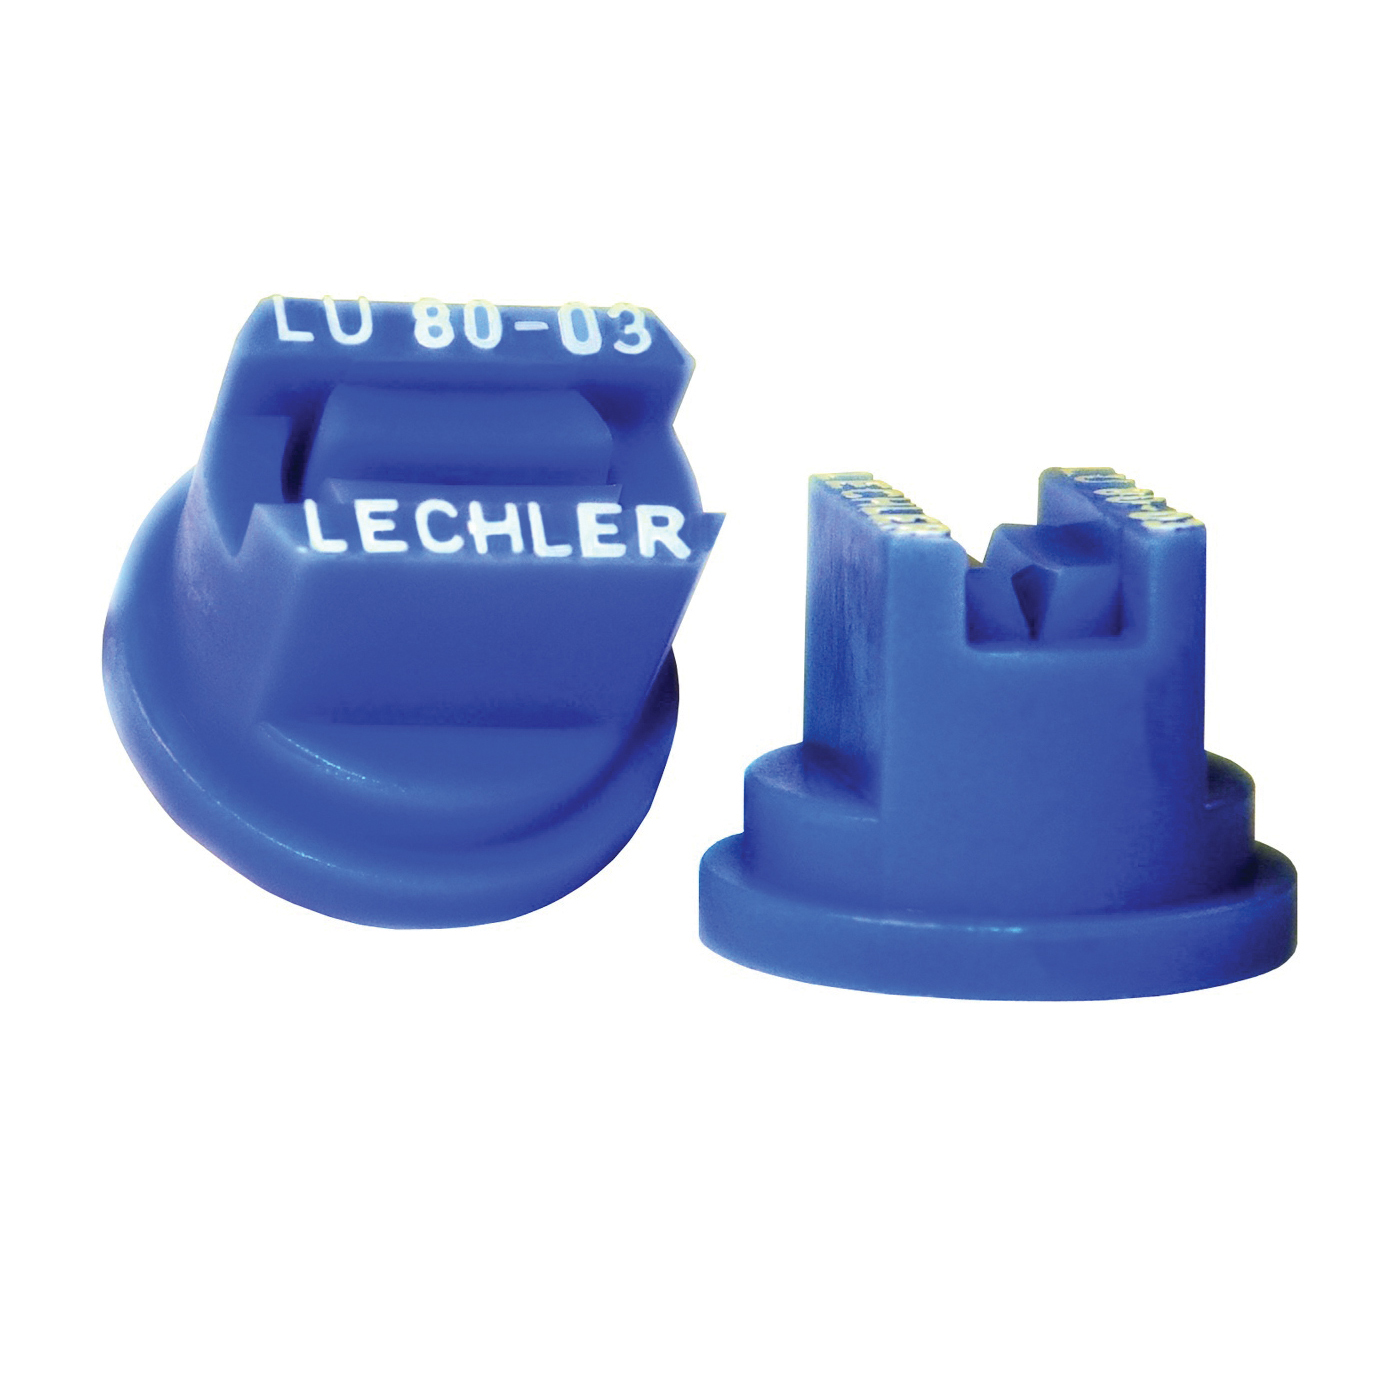 LU 80-03 6PK Spray Nozzle, Multi-Range Universal Flat, Polyoxymethylene, Blue, For: Y8253048 Series 8 mm Cap